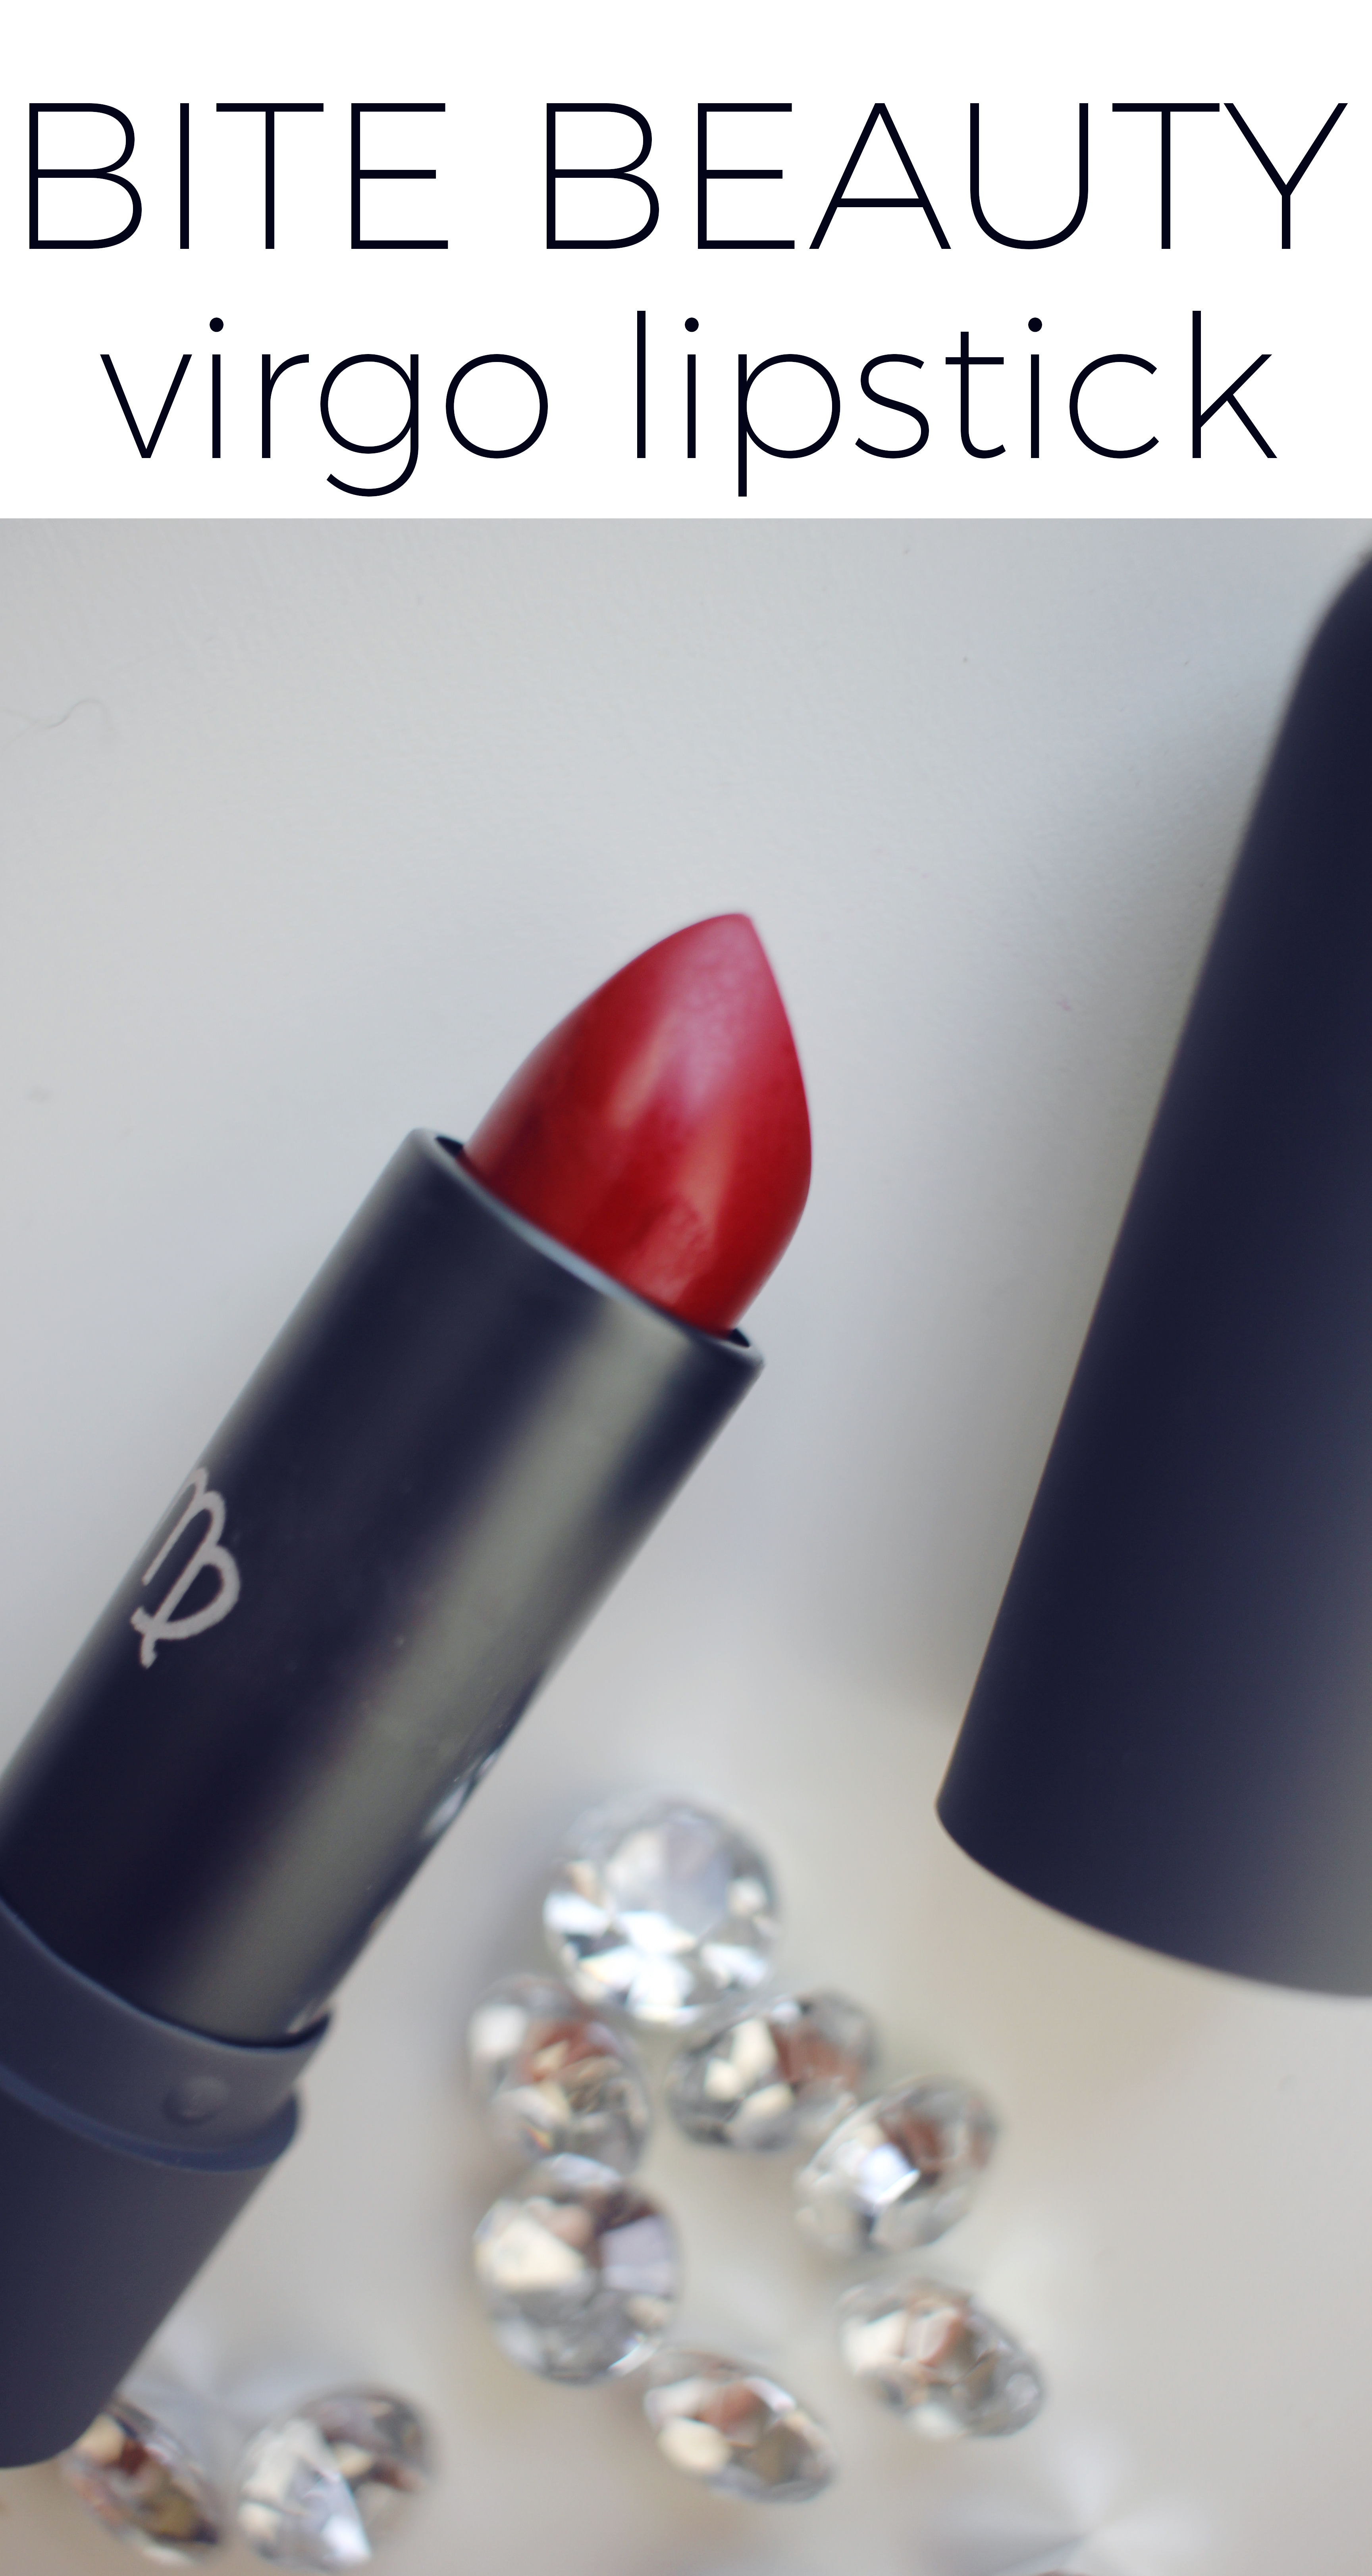 Bite Beauty's Astrology Lipstick in Virgo #greenbeauty #cleanbeauty #naturalbeauty #bitebeauty